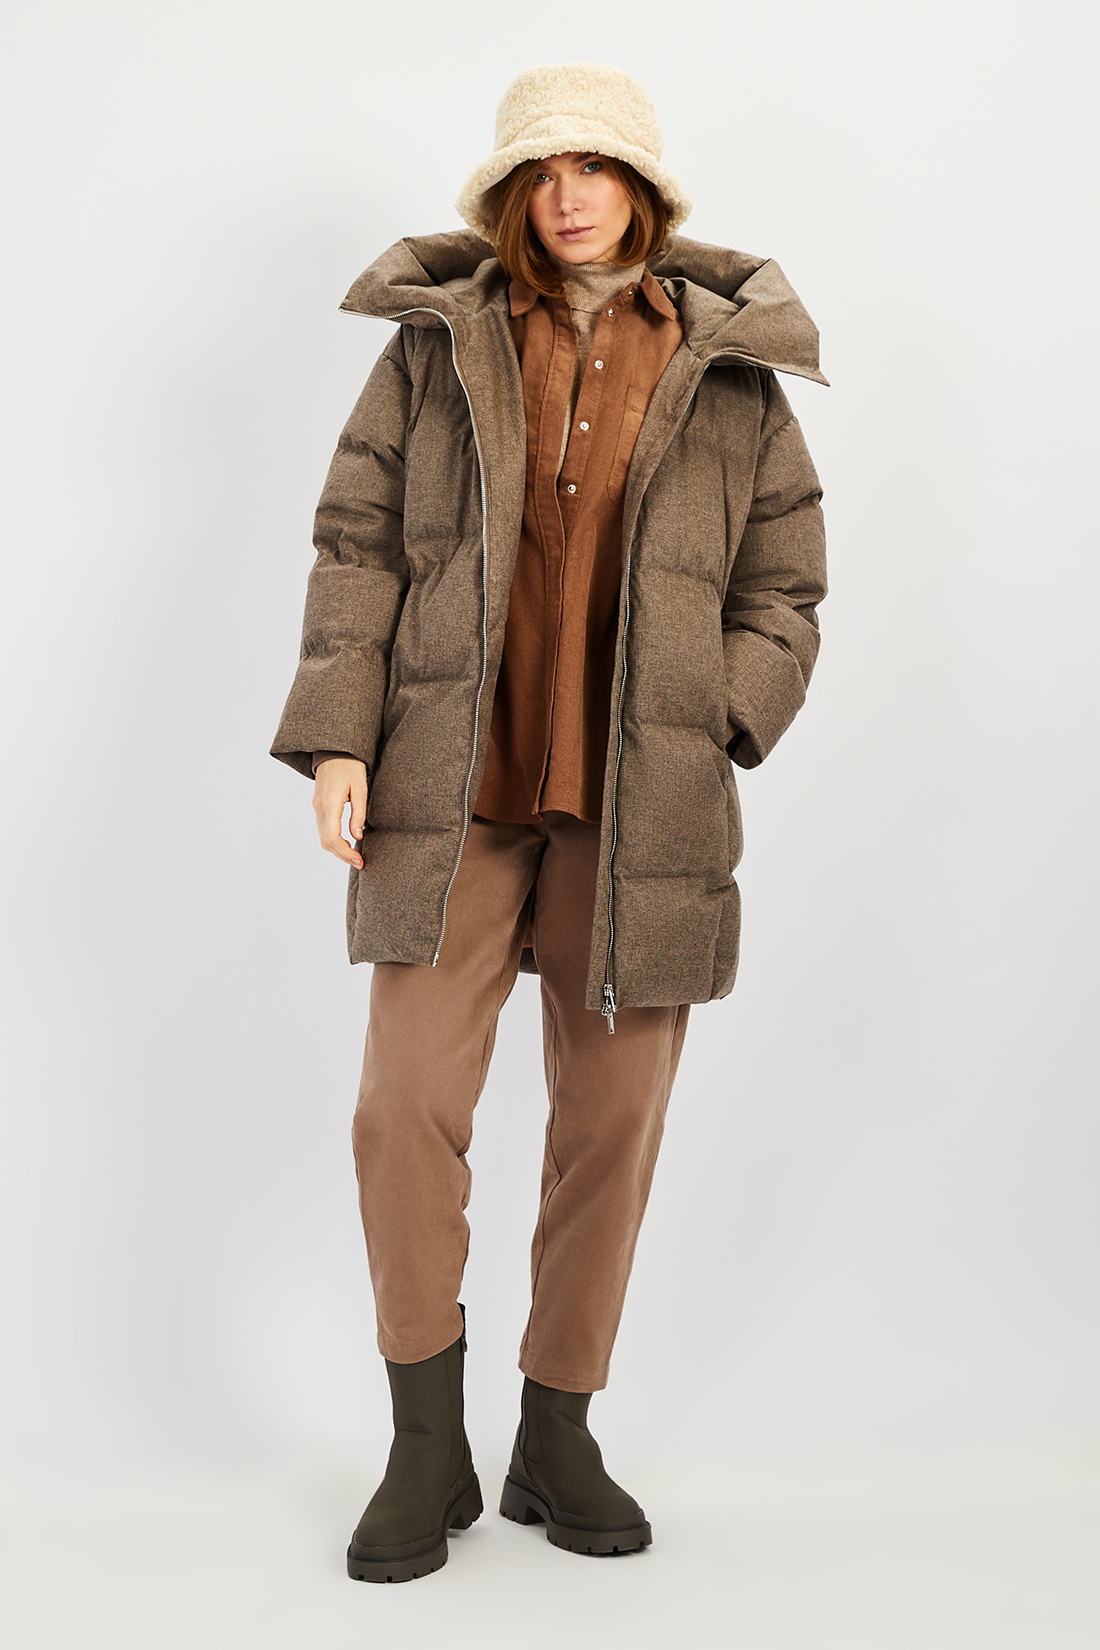 Куртка (Эко пух) (арт. baon B0422506), размер M, цвет коричневый Куртка (Эко пух) (арт. baon B0422506) - фото 7